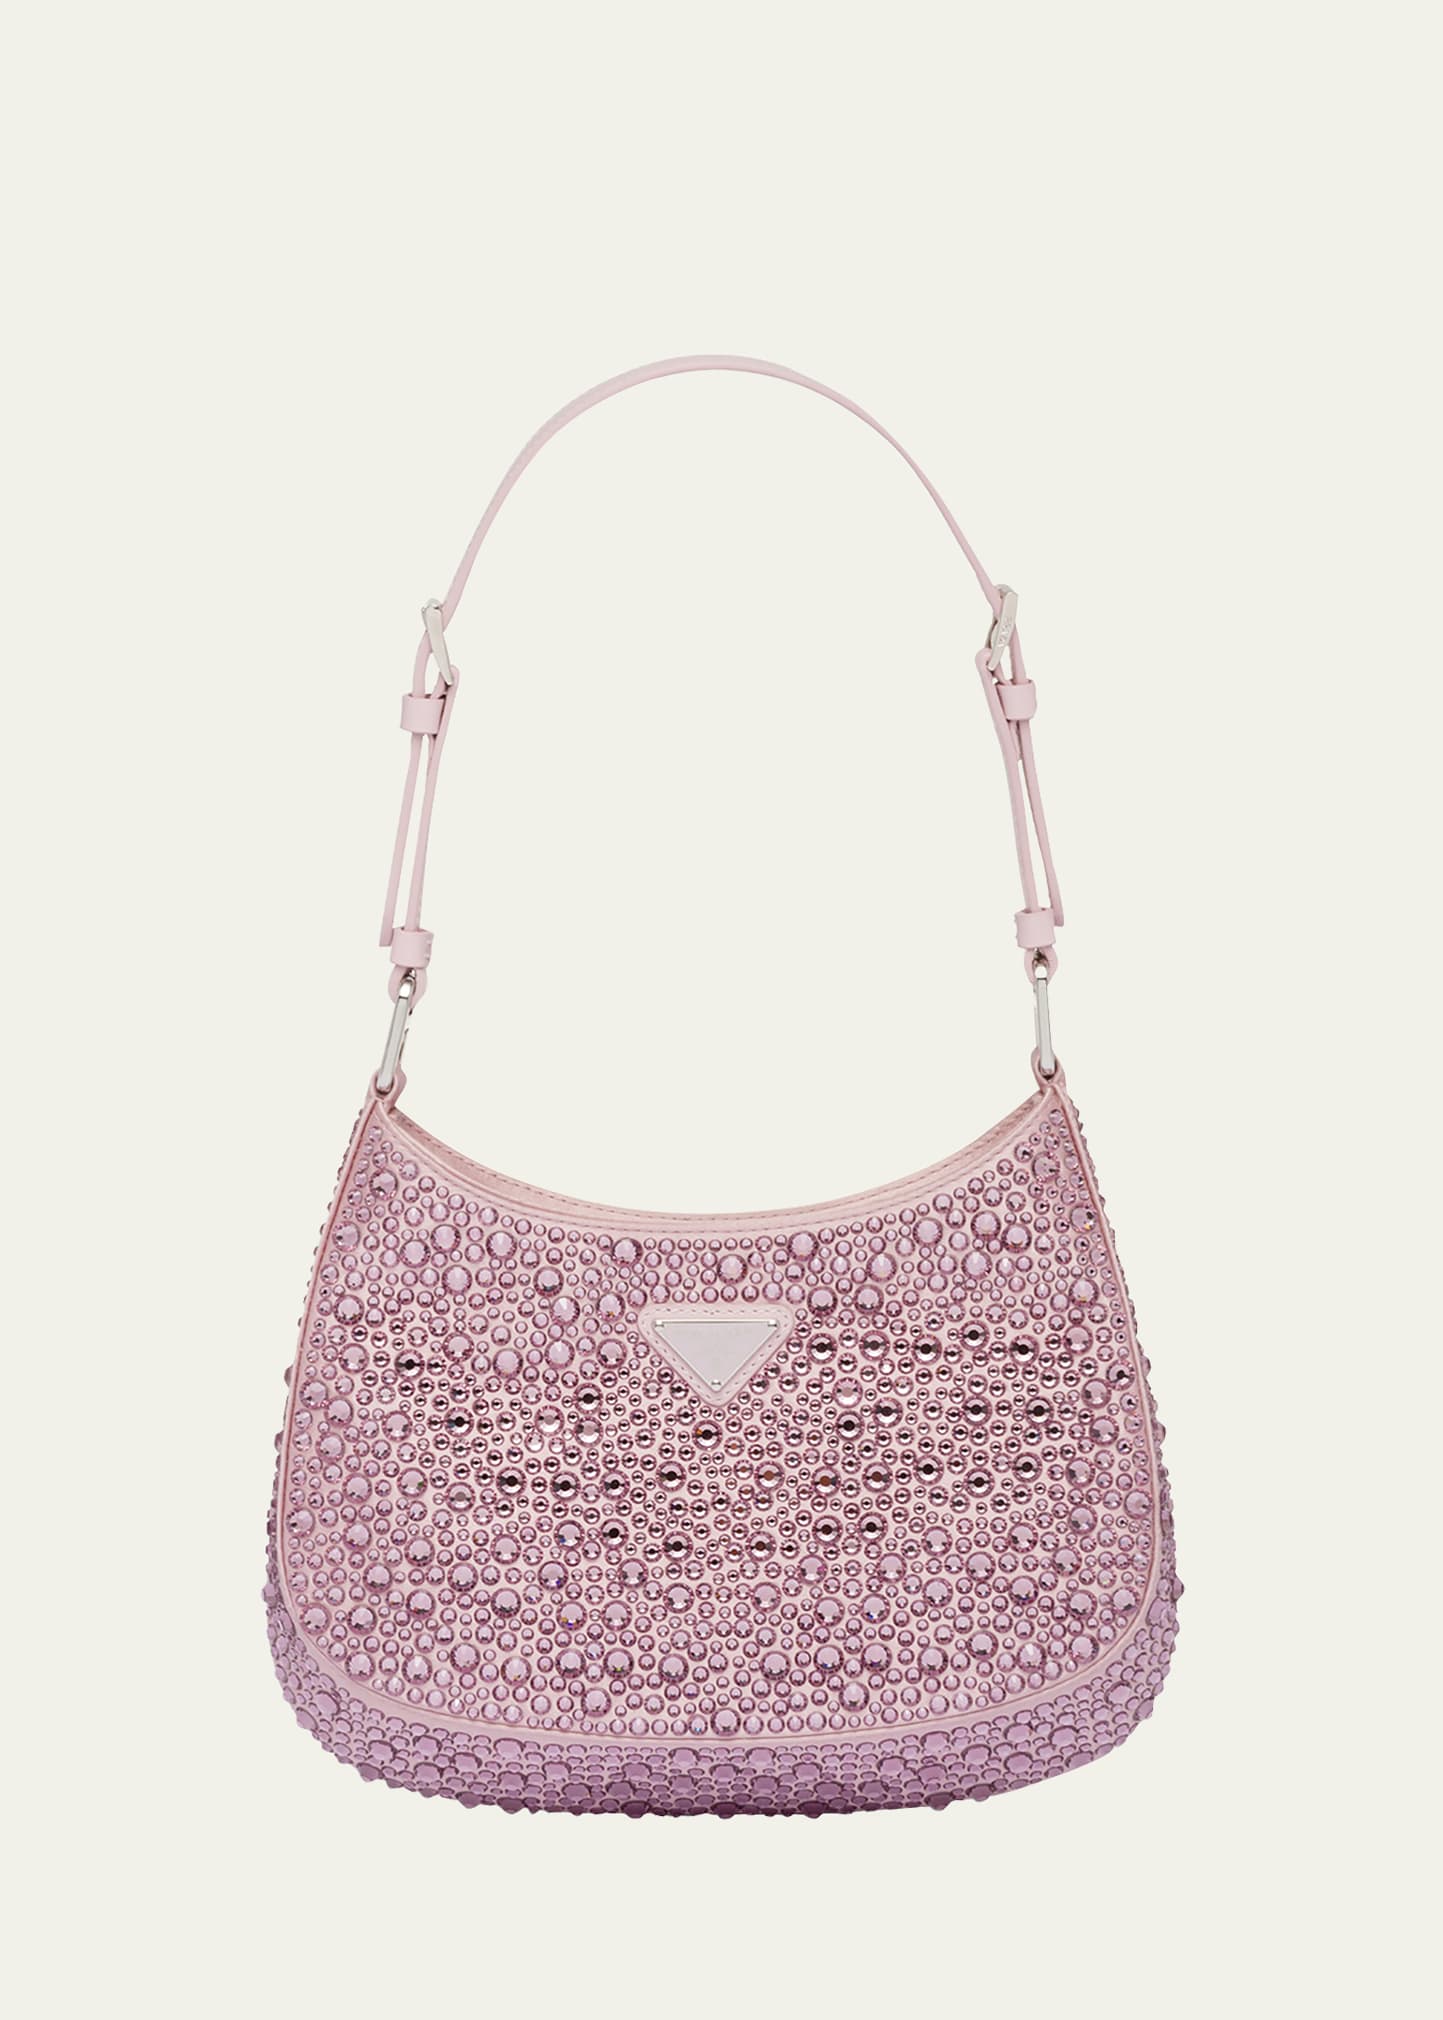 Prada - Pink Alabstro Galleria Crystal Small Satchel Bag